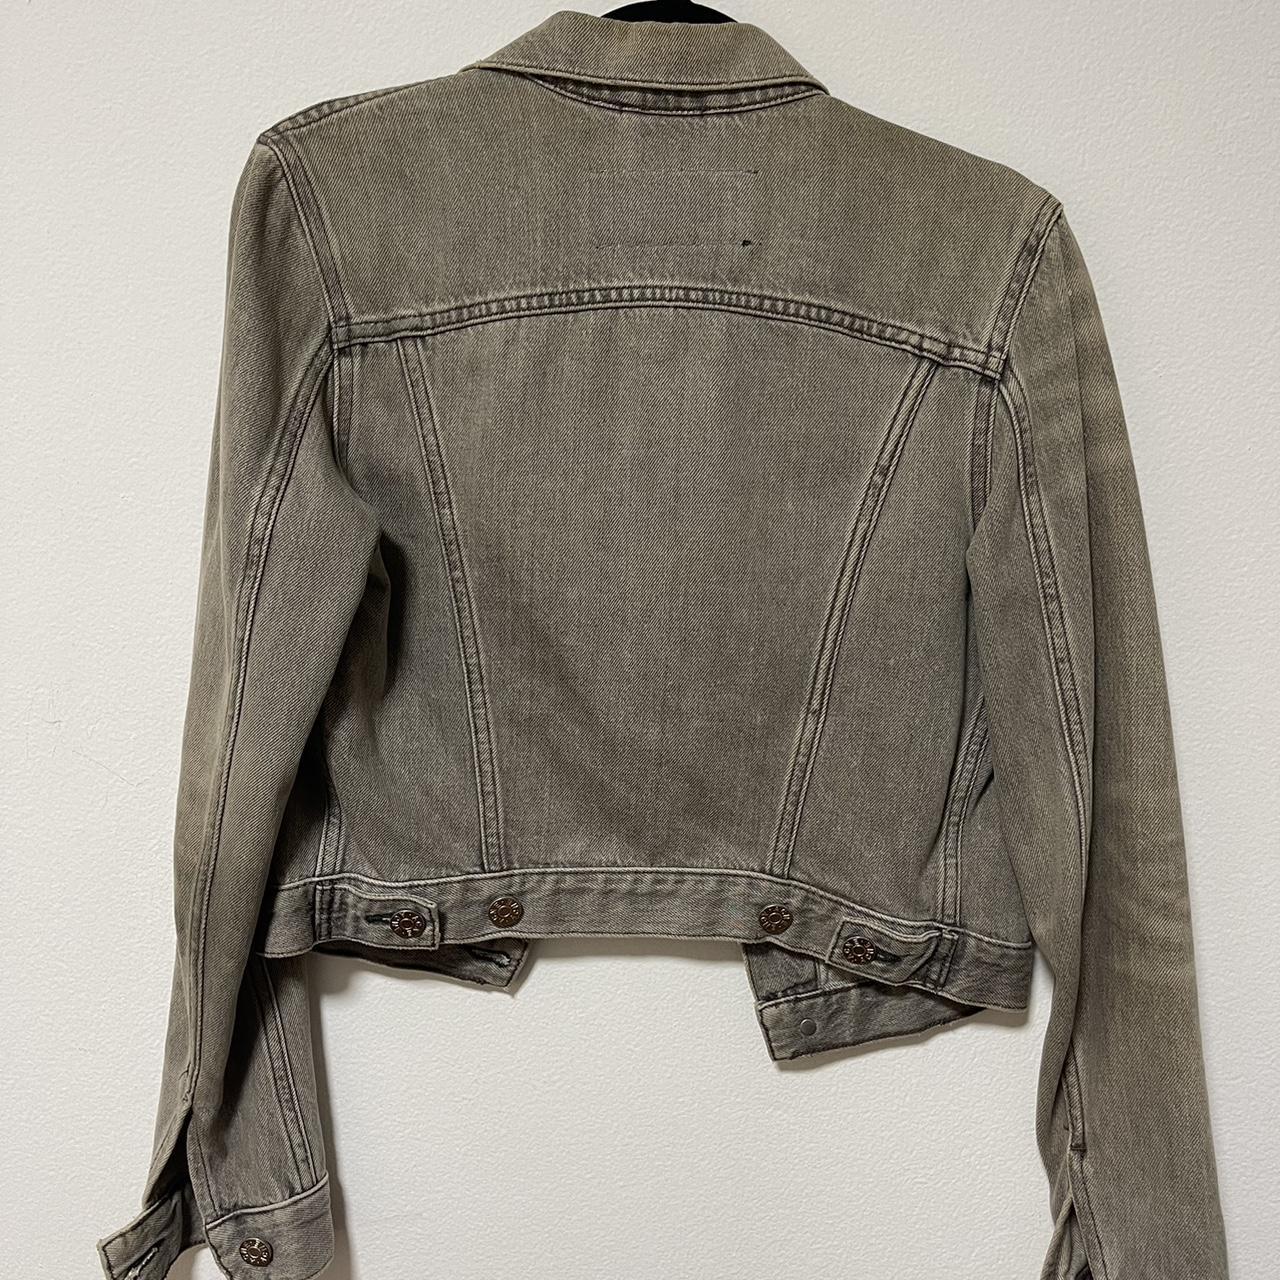 Acne Studios Cropped Denim Jacket in XS. Made in... - Depop